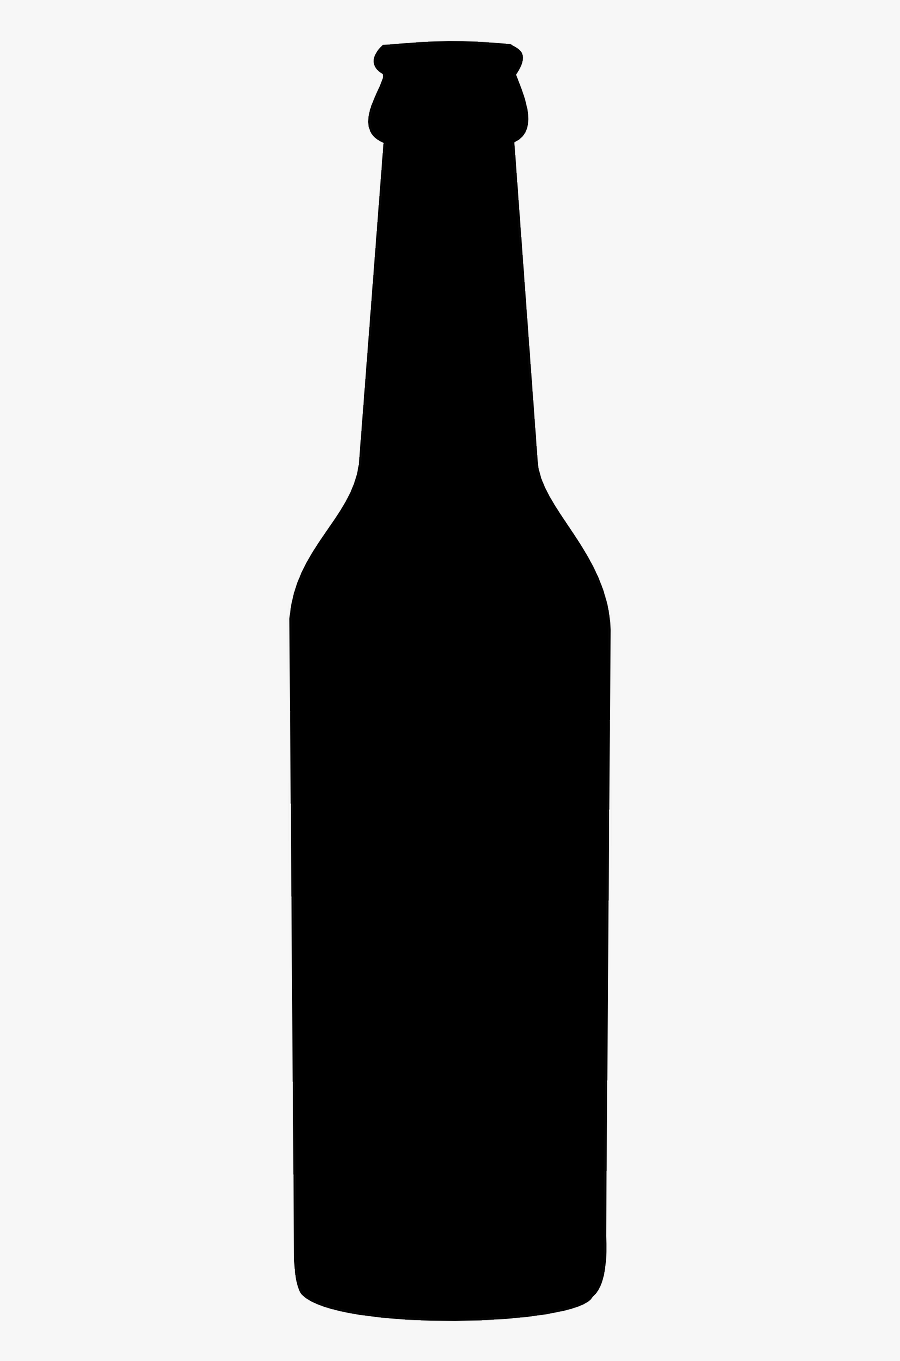 Beer Bottle Vector Png, Transparent Clipart